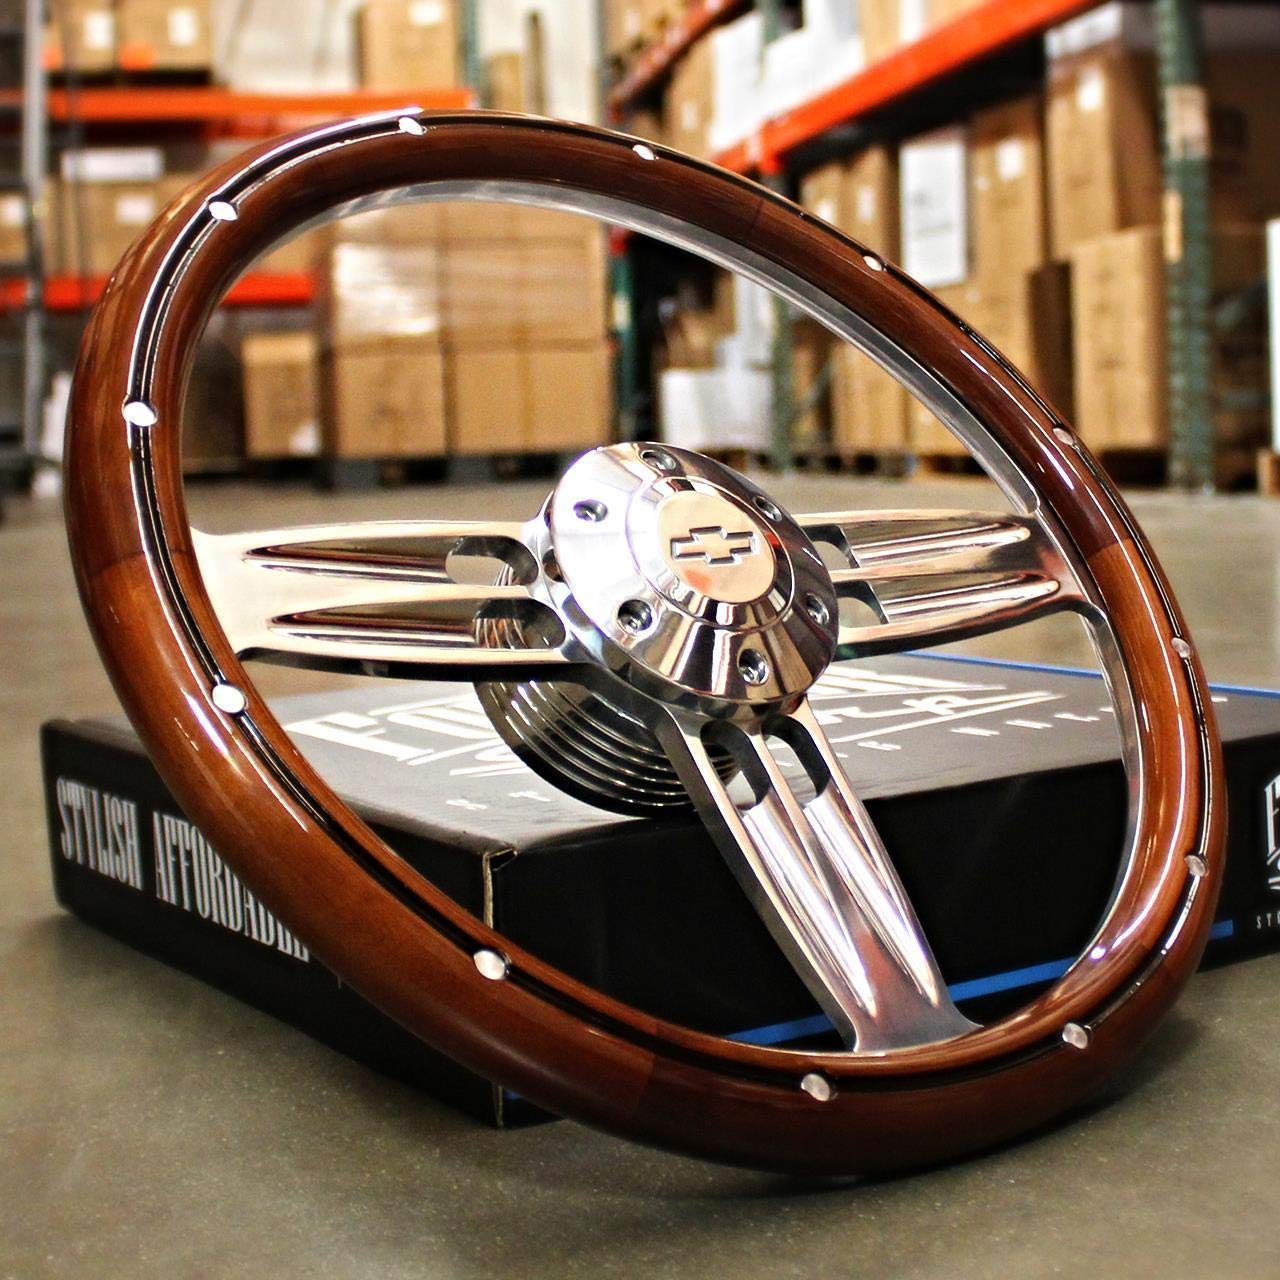 Wooden steering wheel